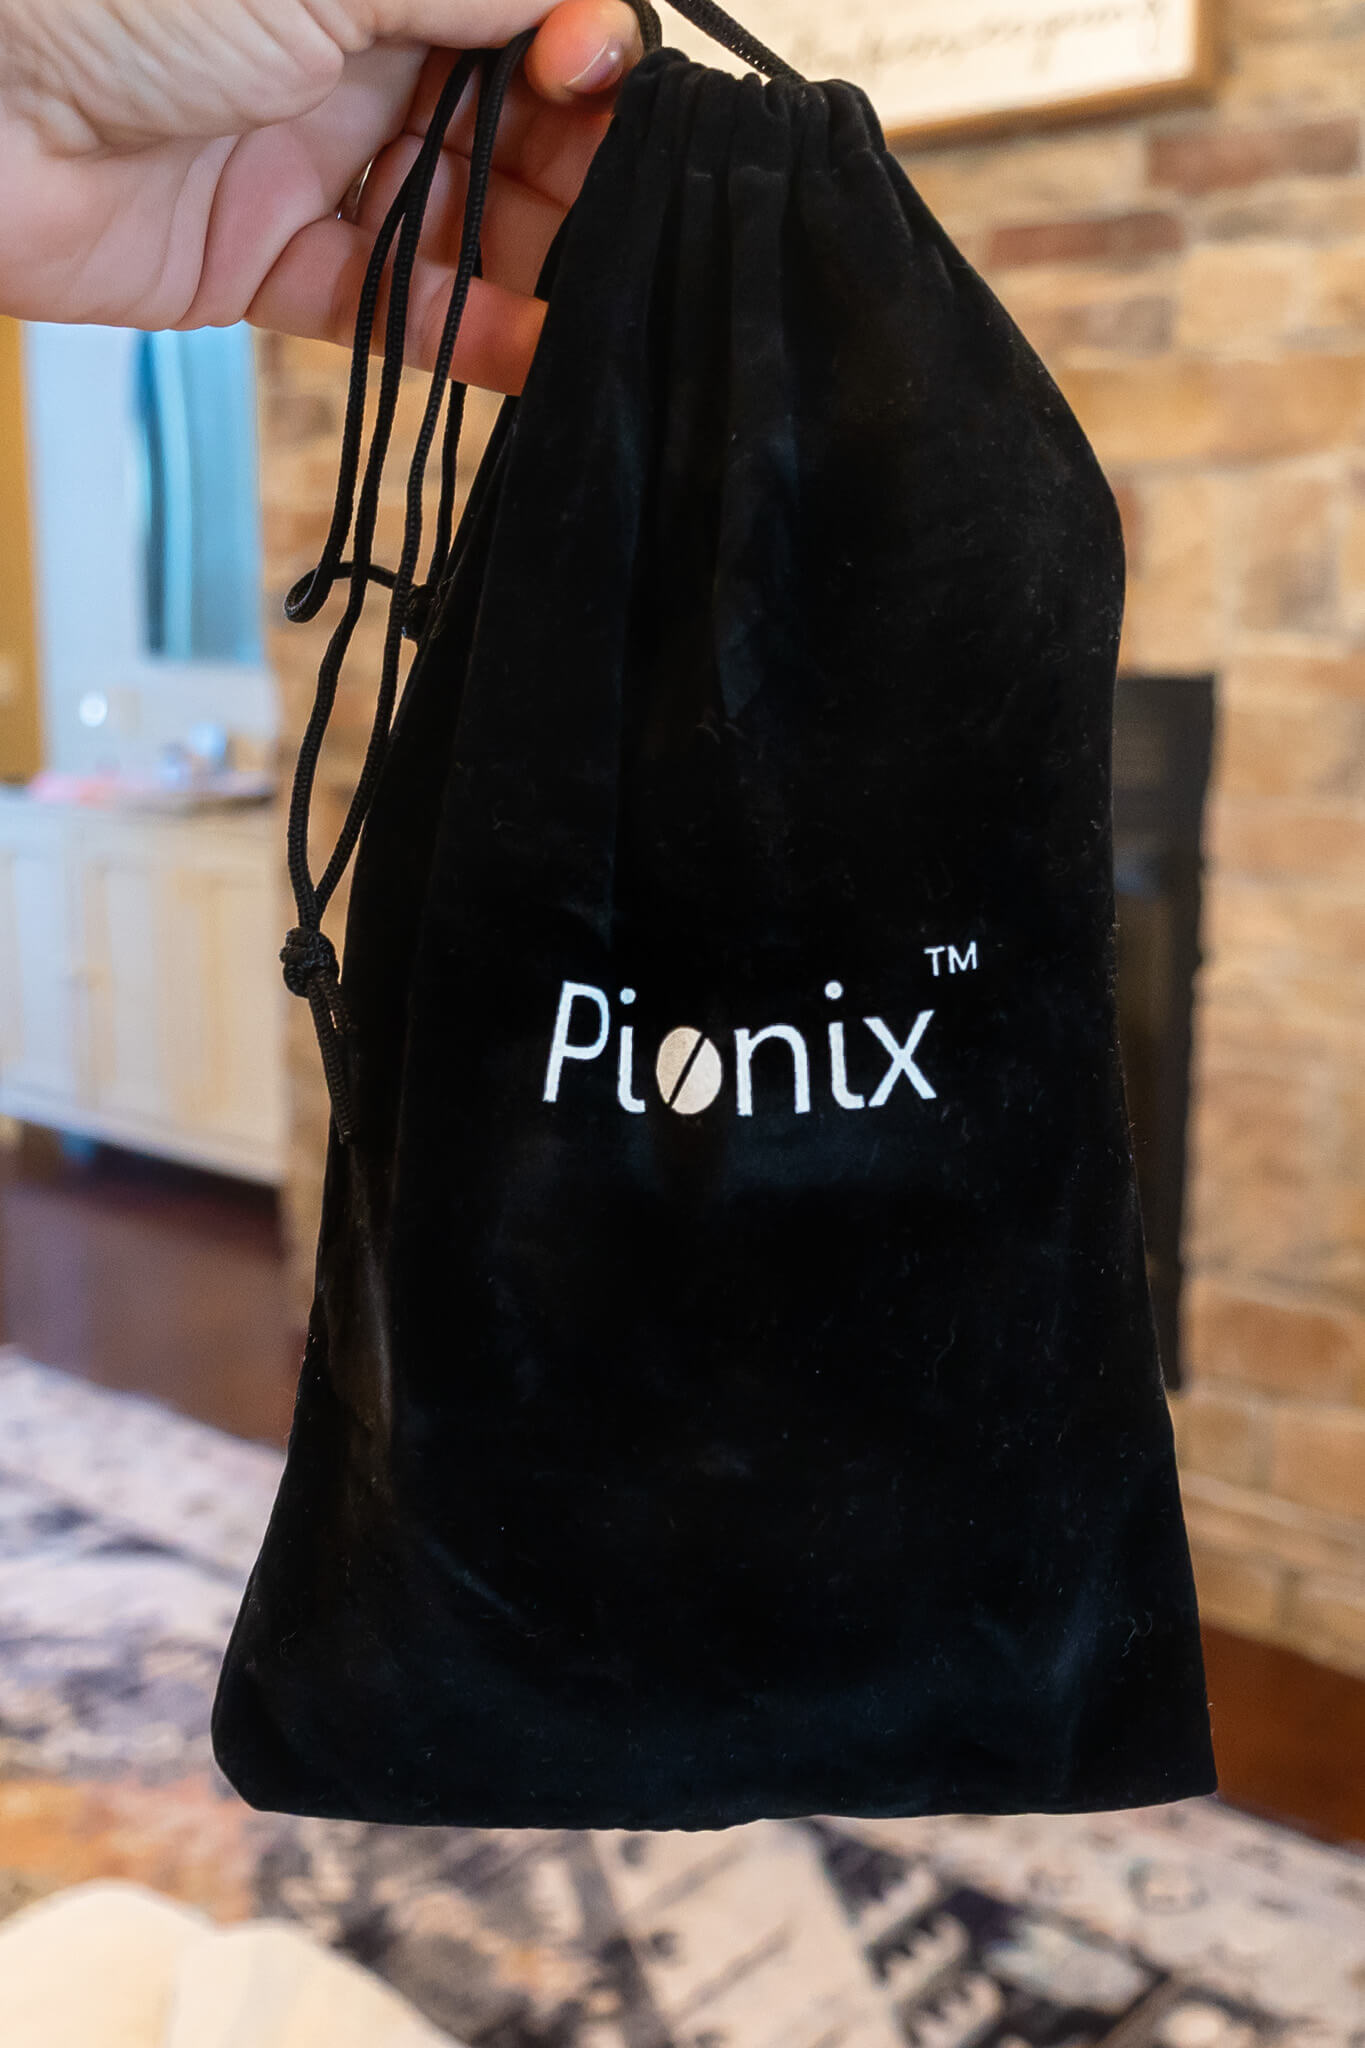 Pionix travel clothes steamers storage bag